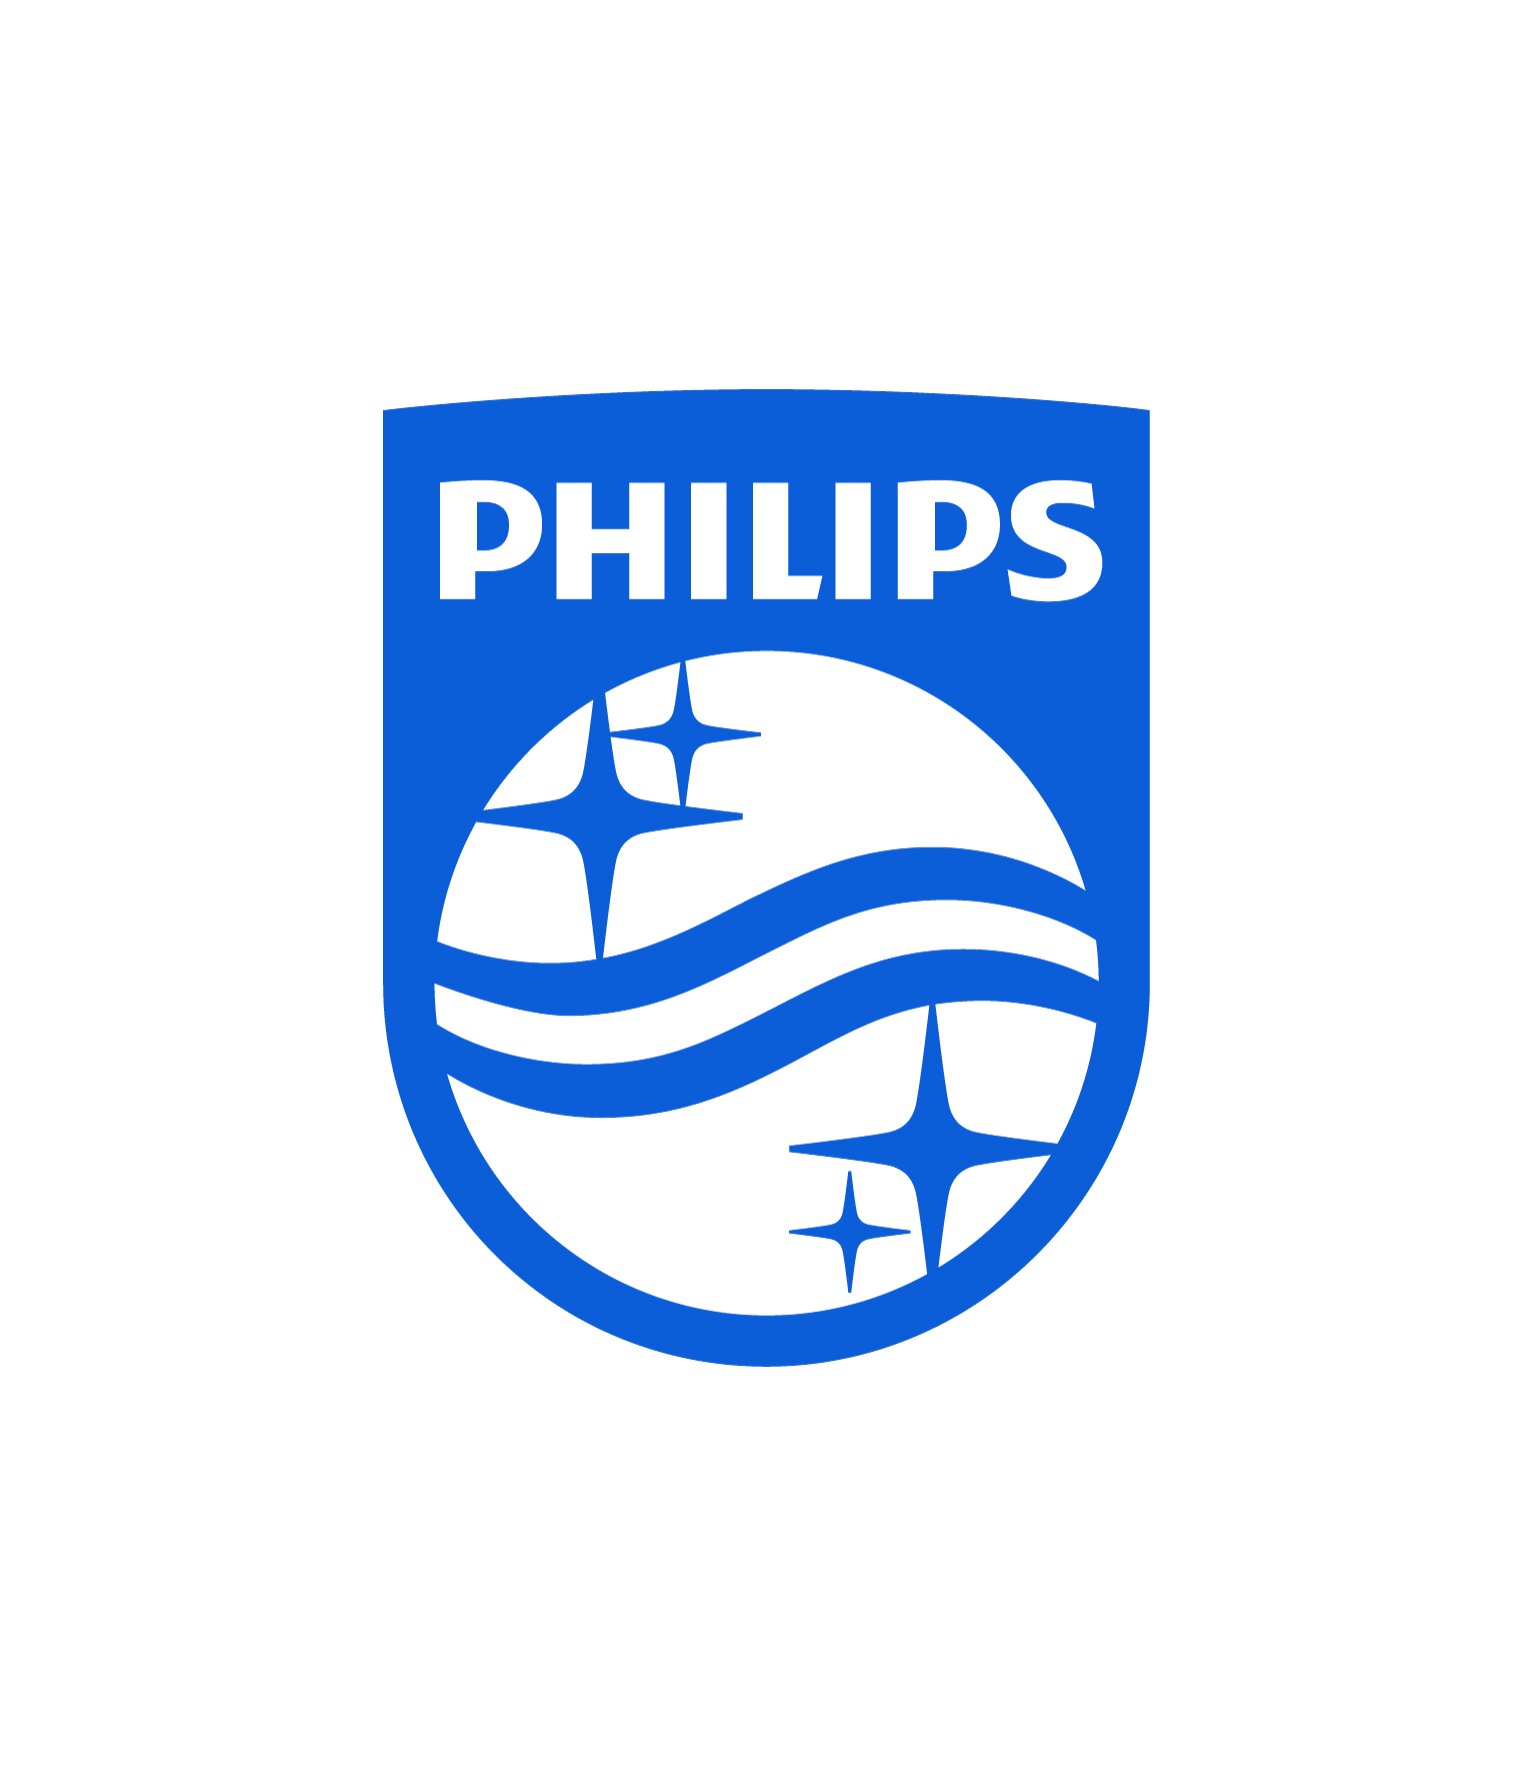 Philips shield